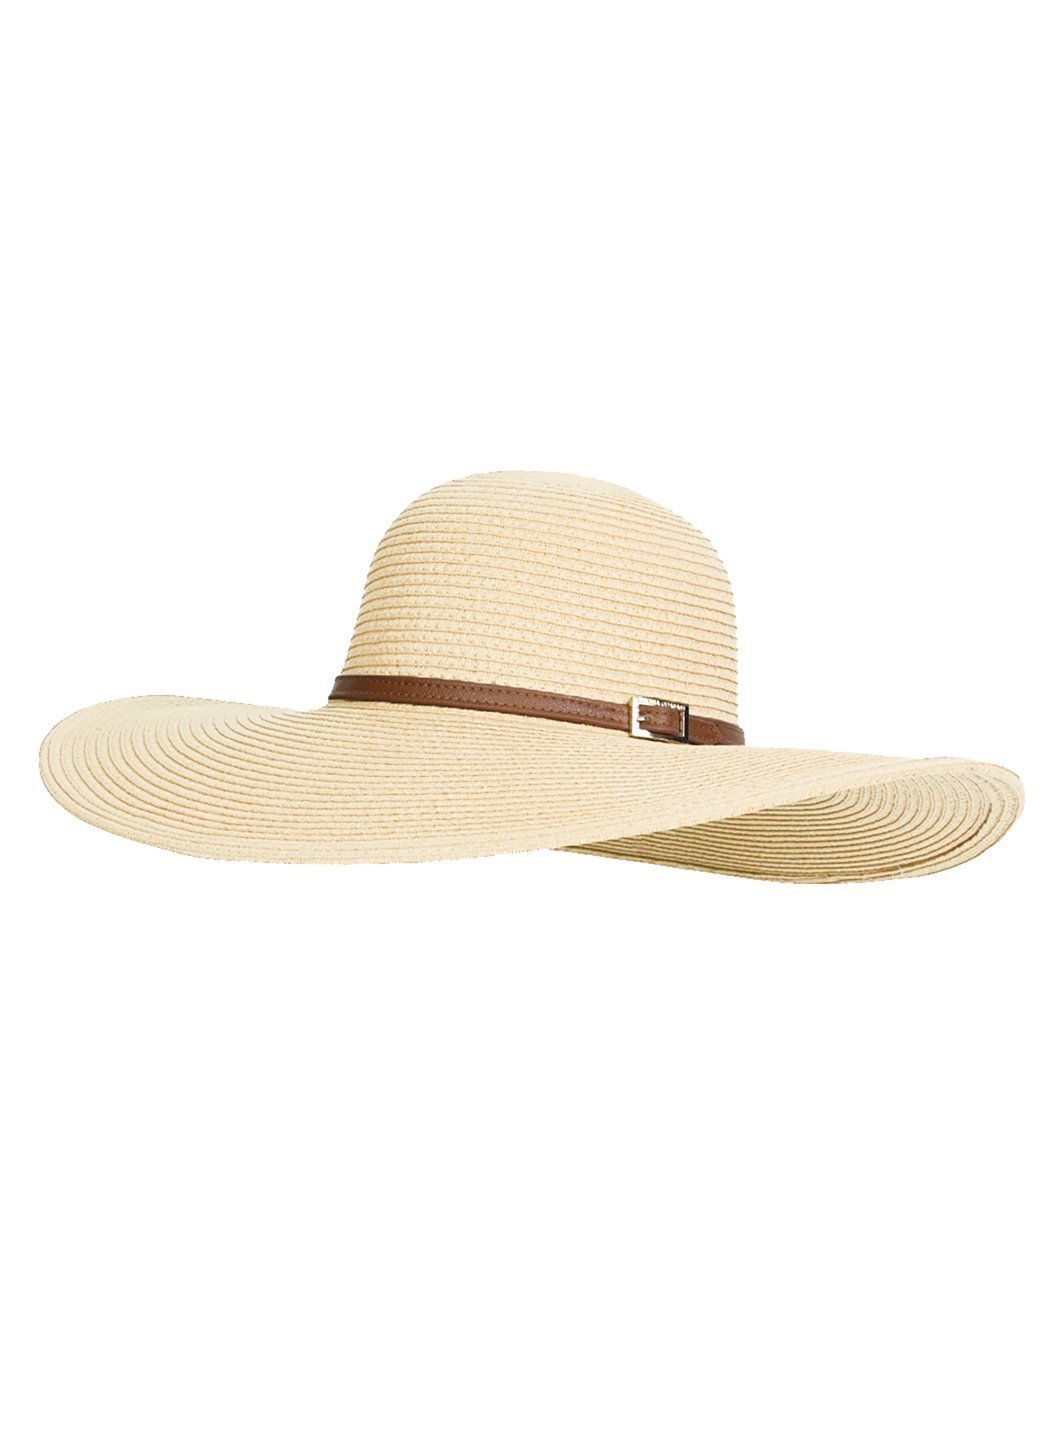 jemima cream wide brimmed hat cutout